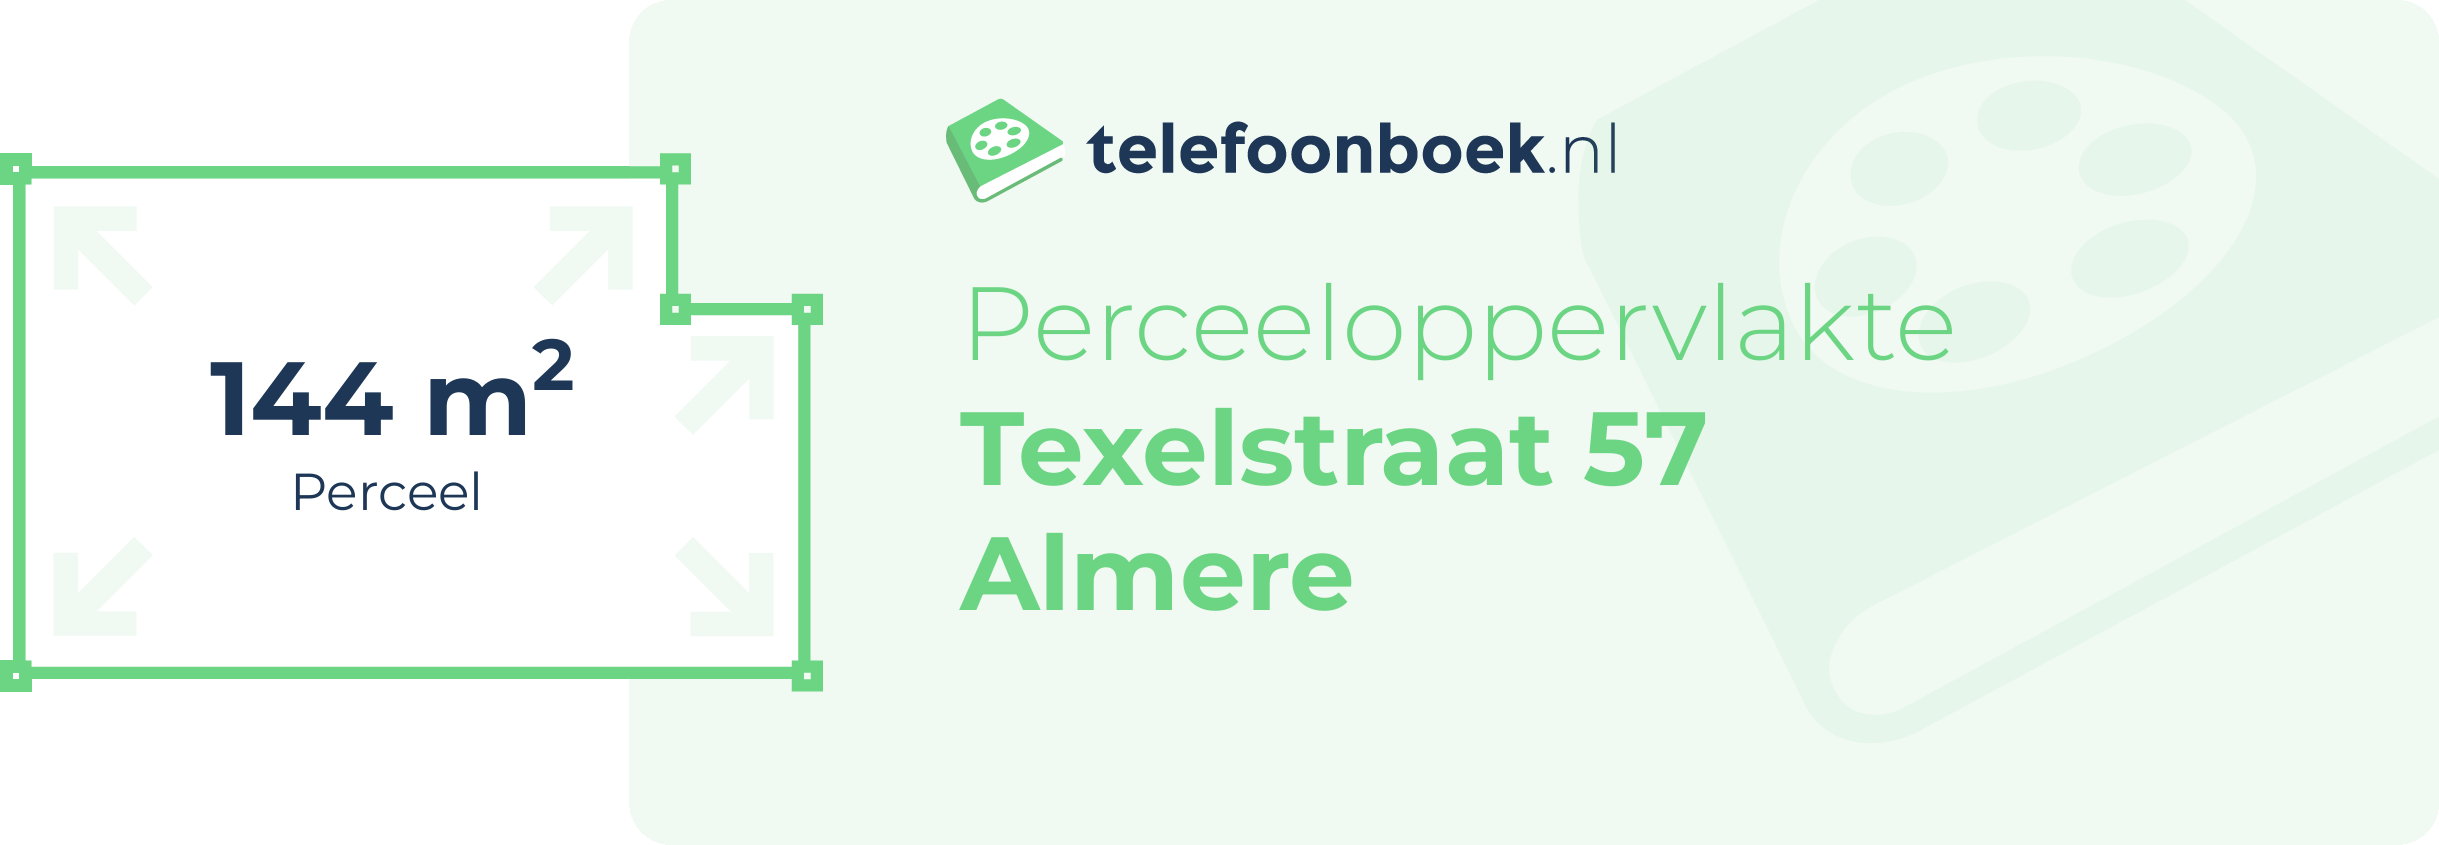 Perceeloppervlakte Texelstraat 57 Almere